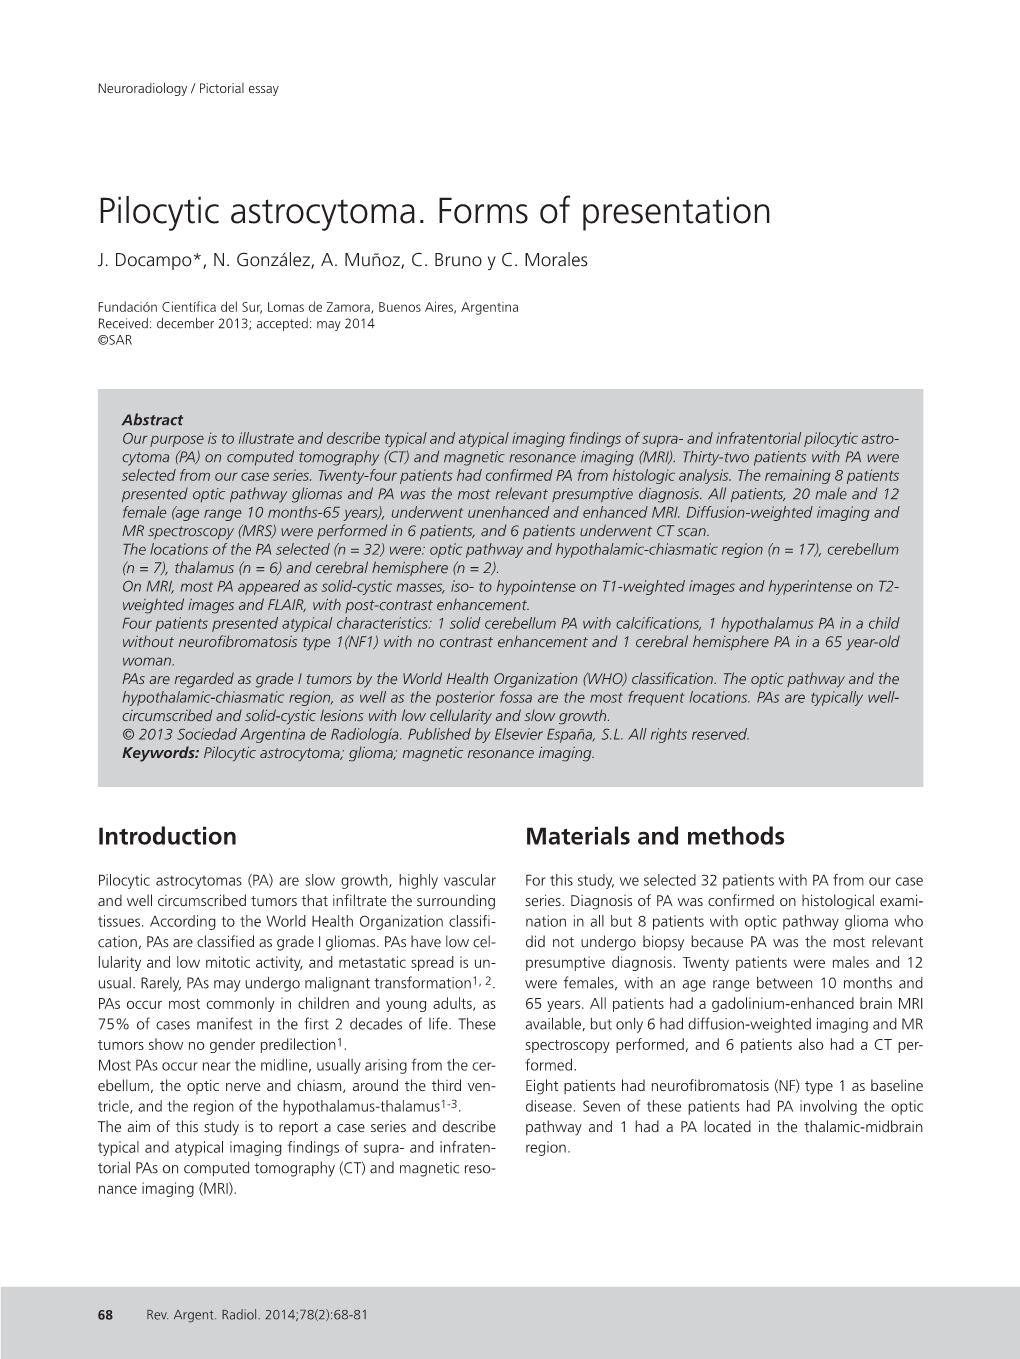 Pilocytic Astrocytoma. Forms of Presentation